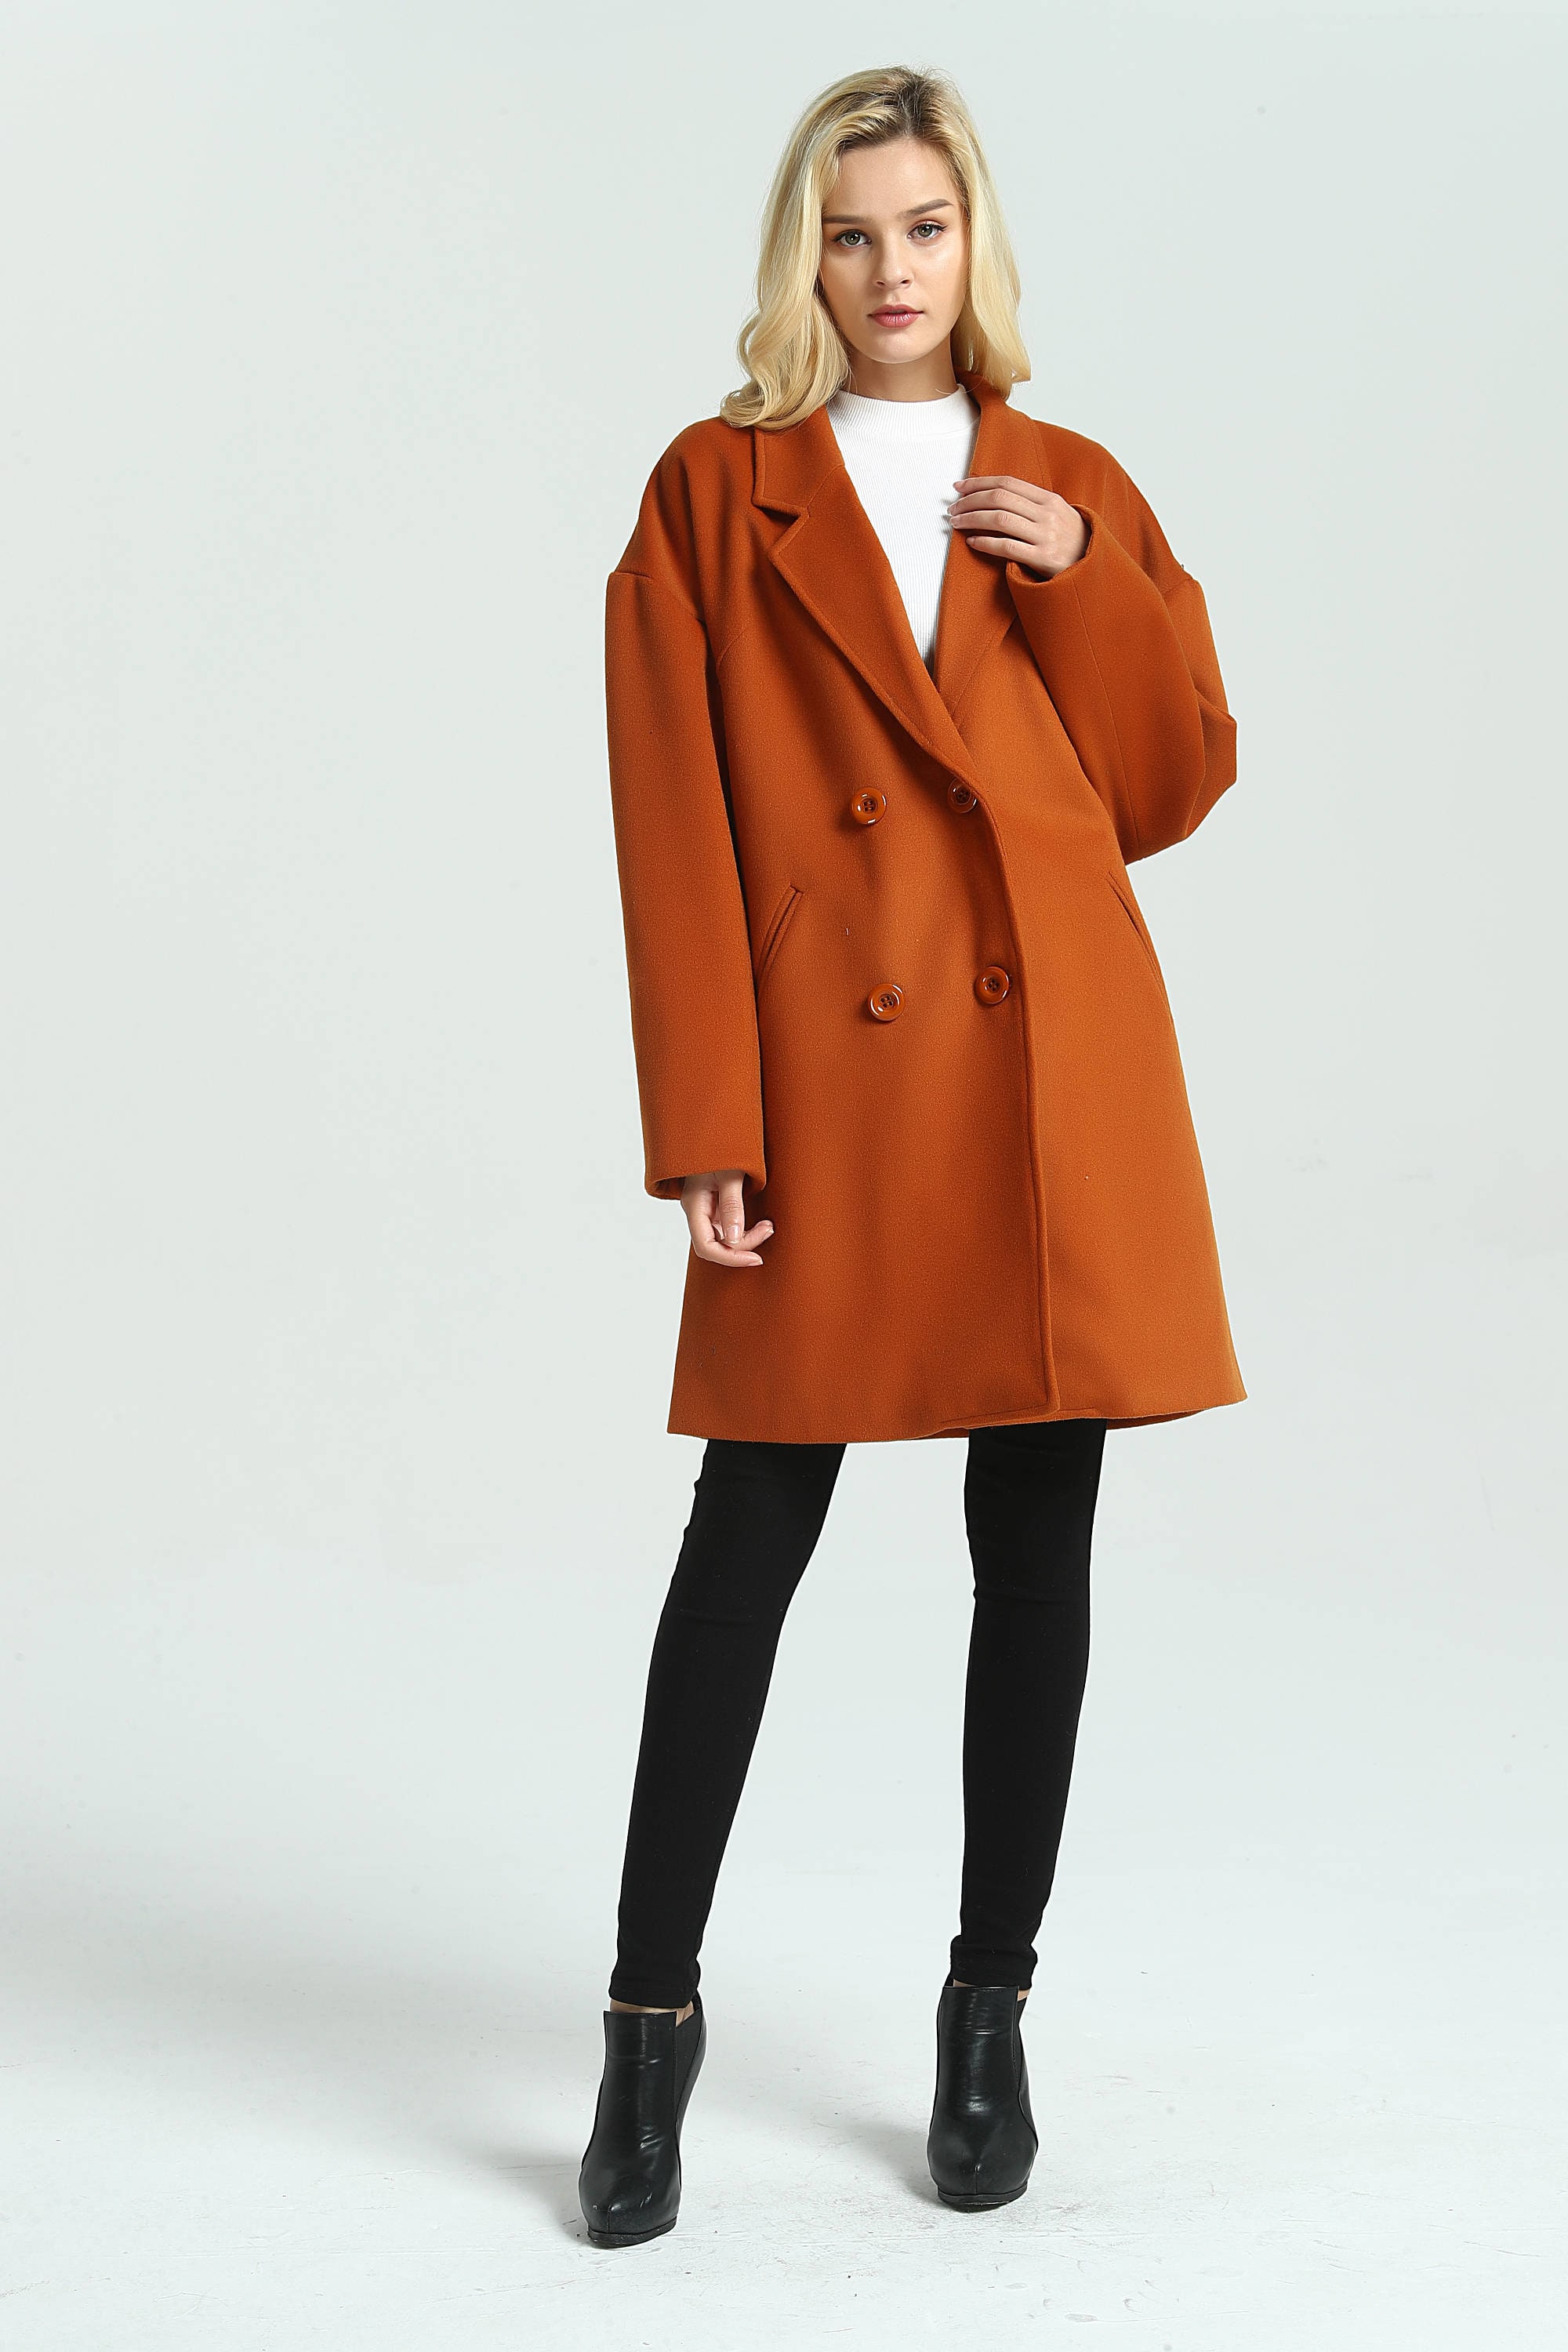 Women Winter Warm Coat,Vanvler Ladies Artificial Wool Lapel Jacket Fashion Outerwear 